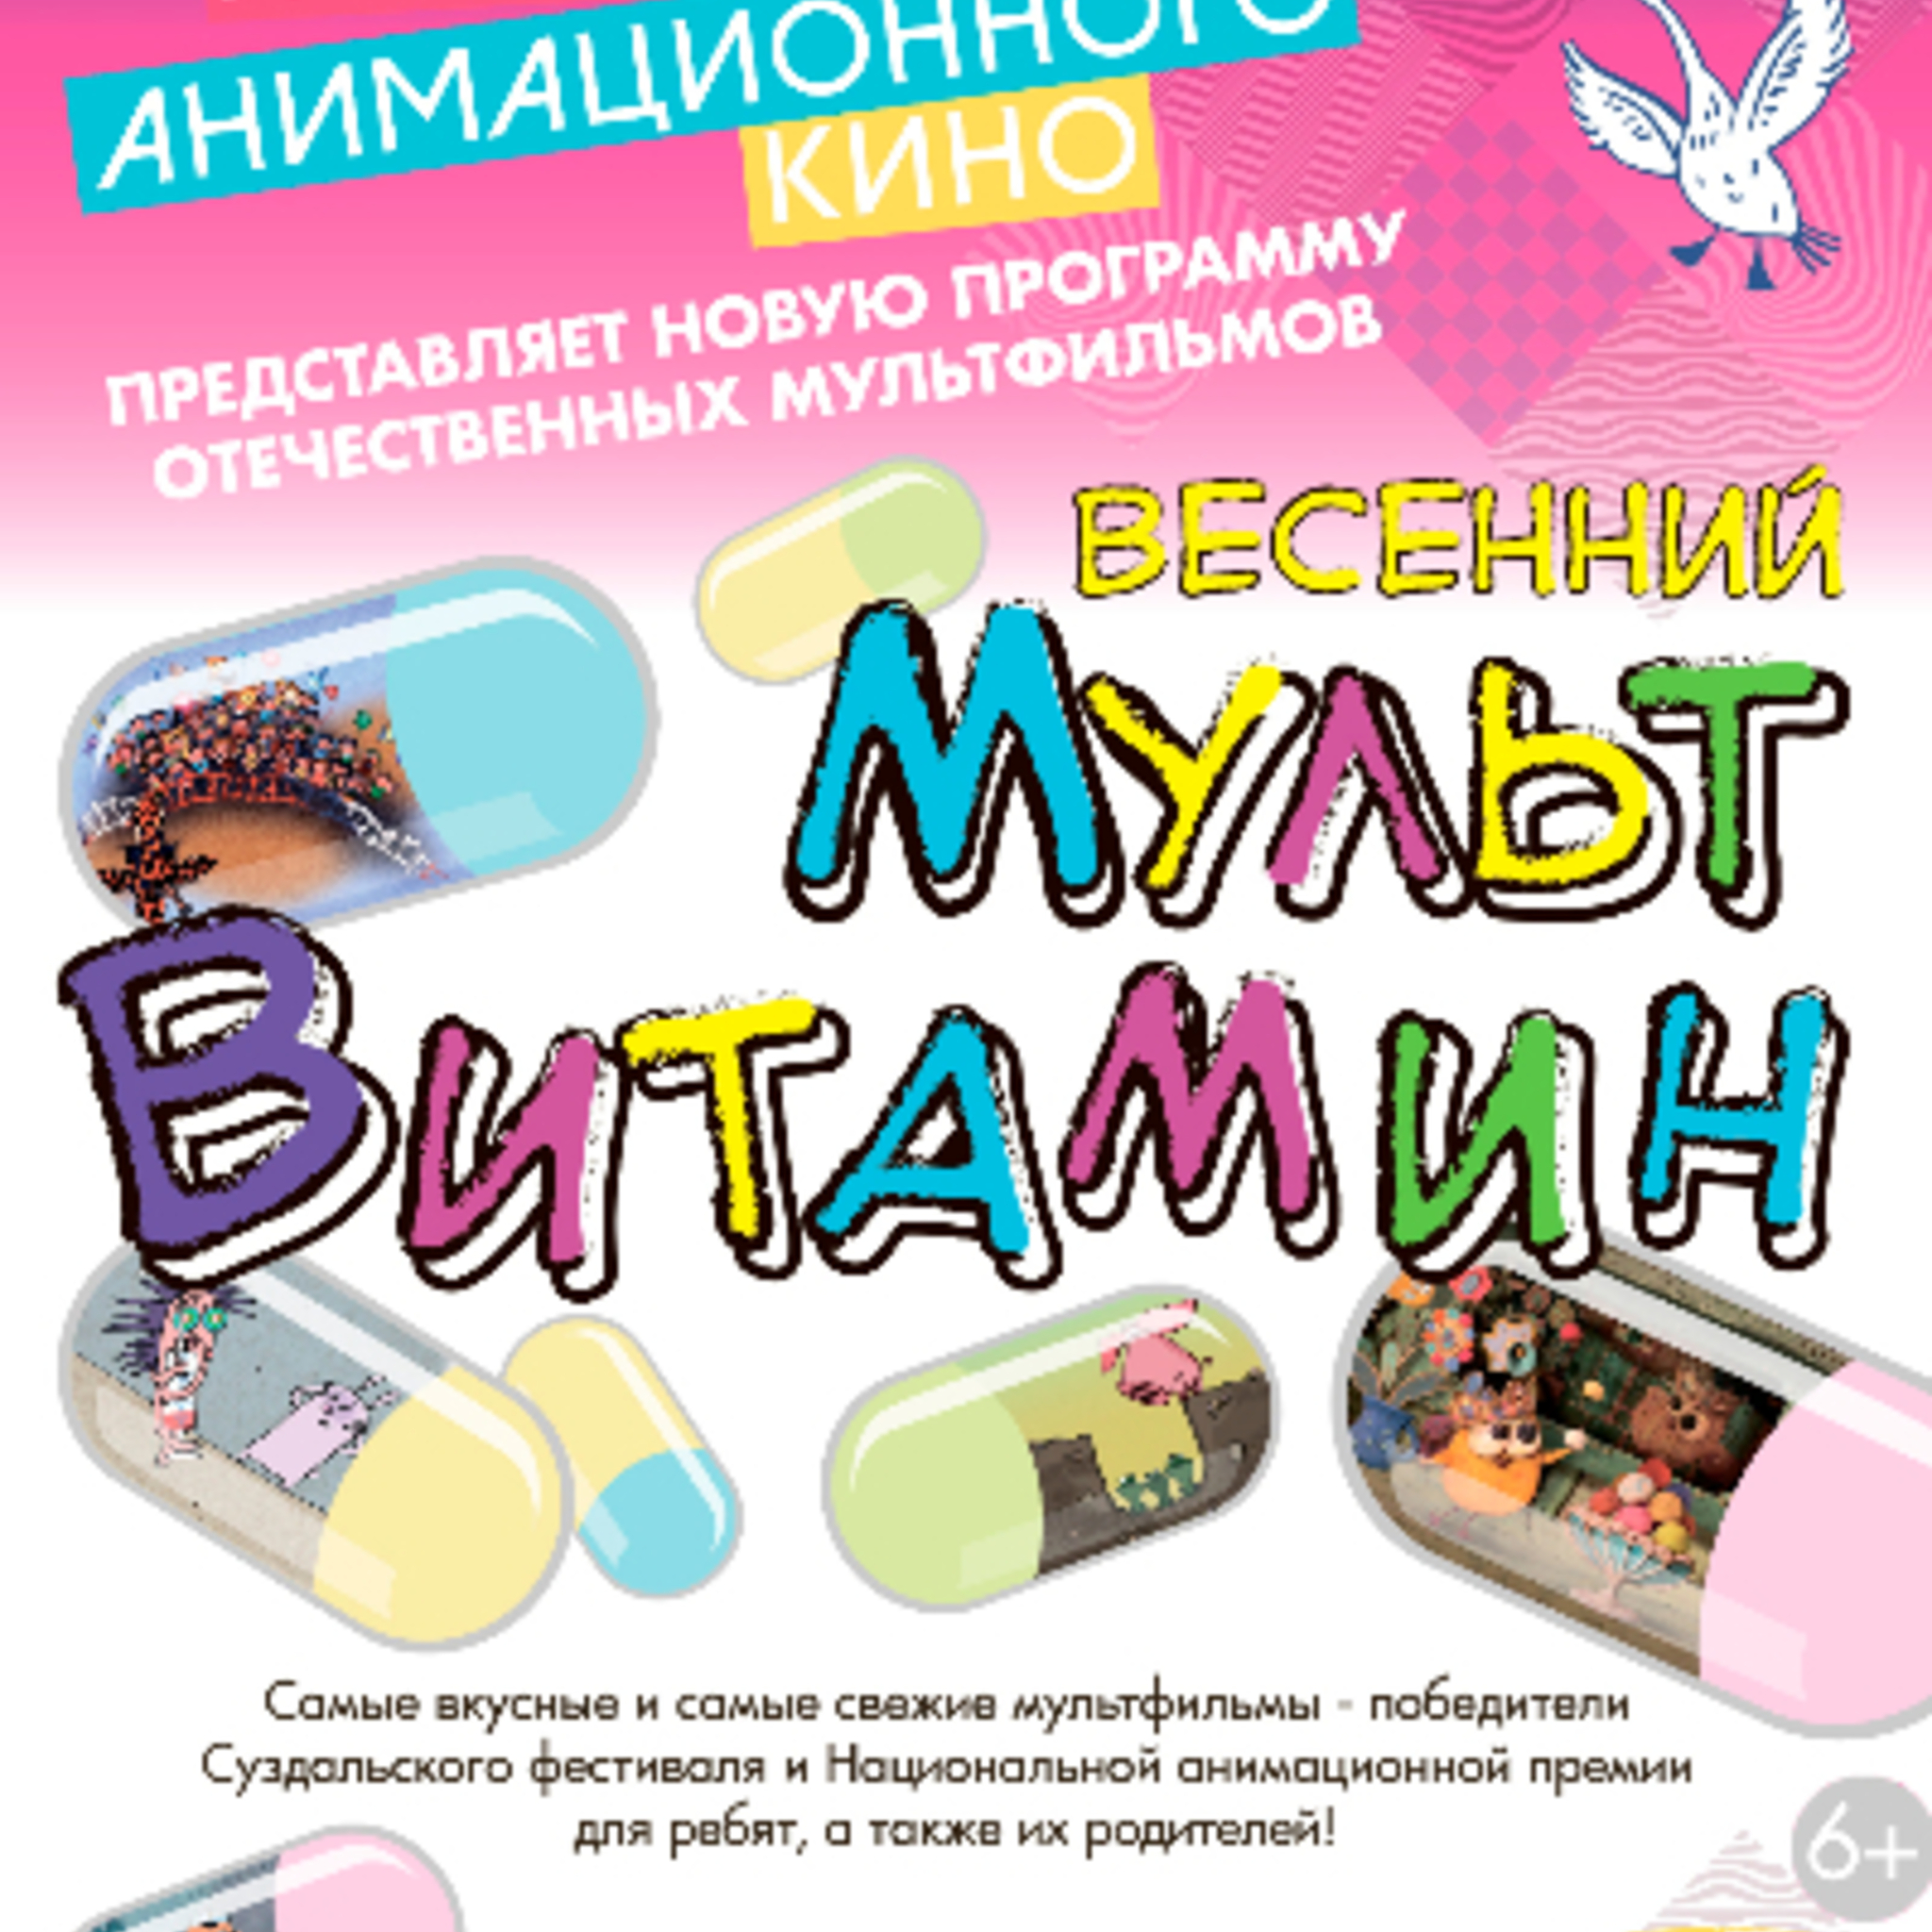 Animation program MultVitamin in the Urals NCCA